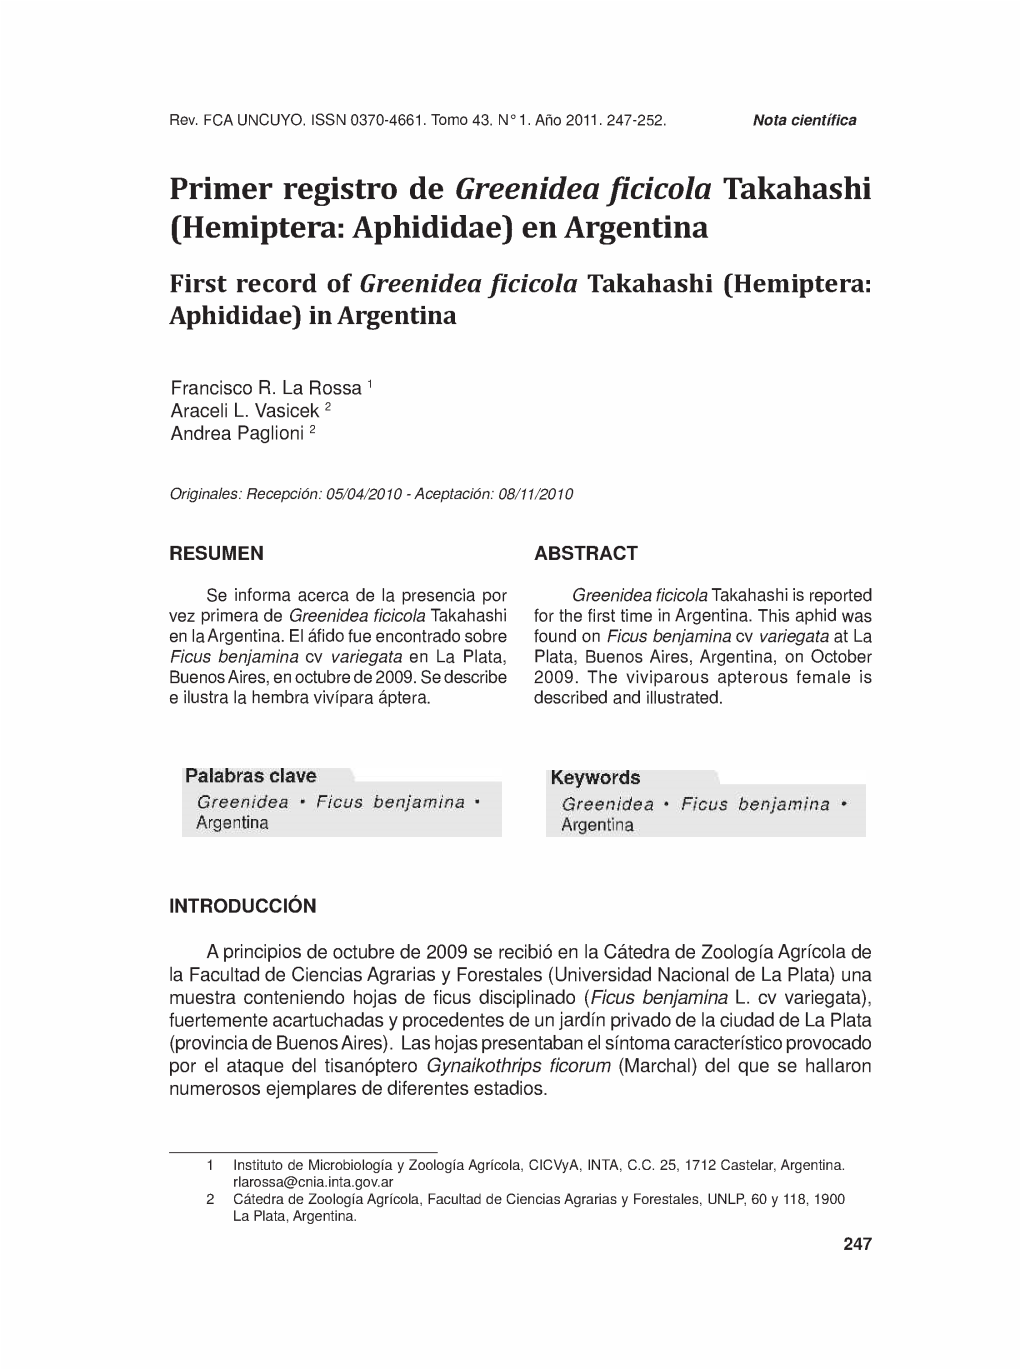 Primer Registro De Greenidea Ficicola Takahashi (Hemiptera: Aphididae) En Argentina First Record of Greenidea Ficicola Takahashi (Hemiptera: Aphididae) in Argentina